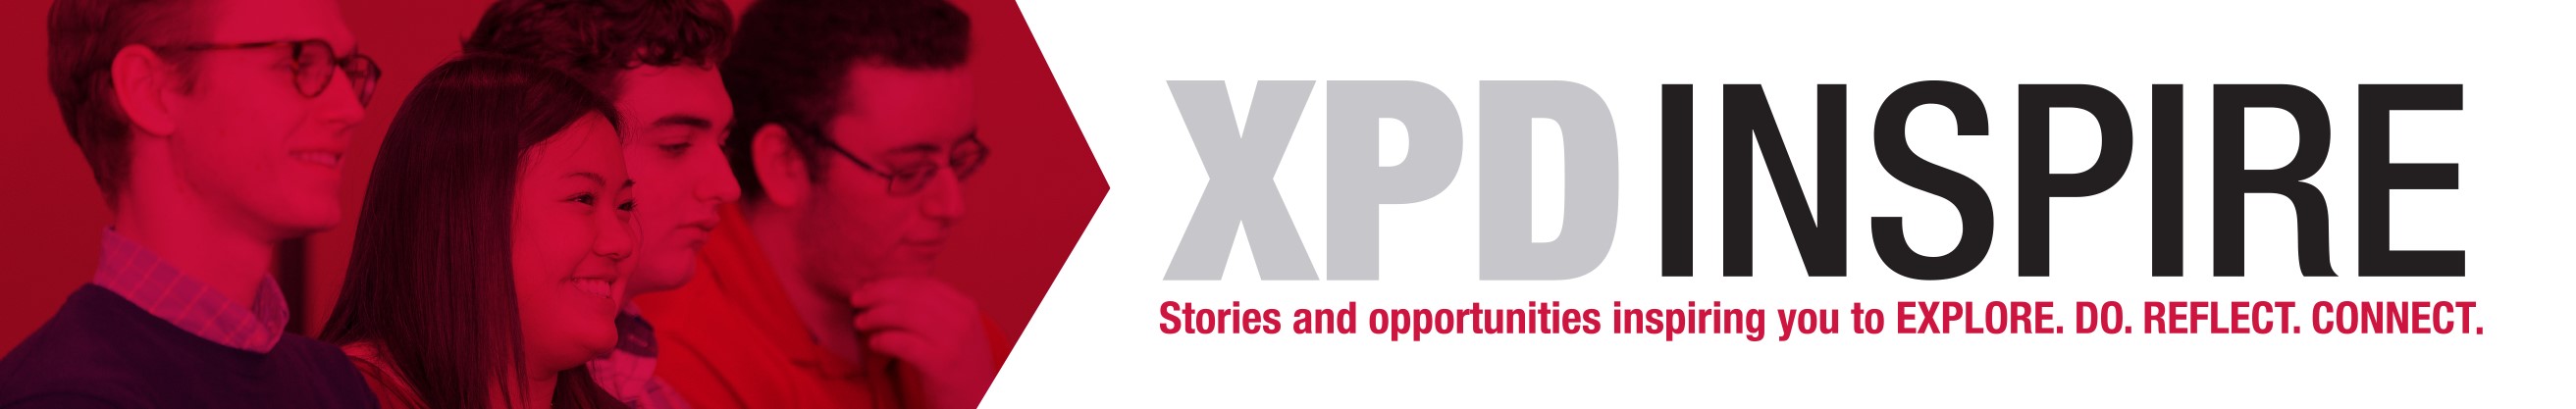 XPDInspire-header 1